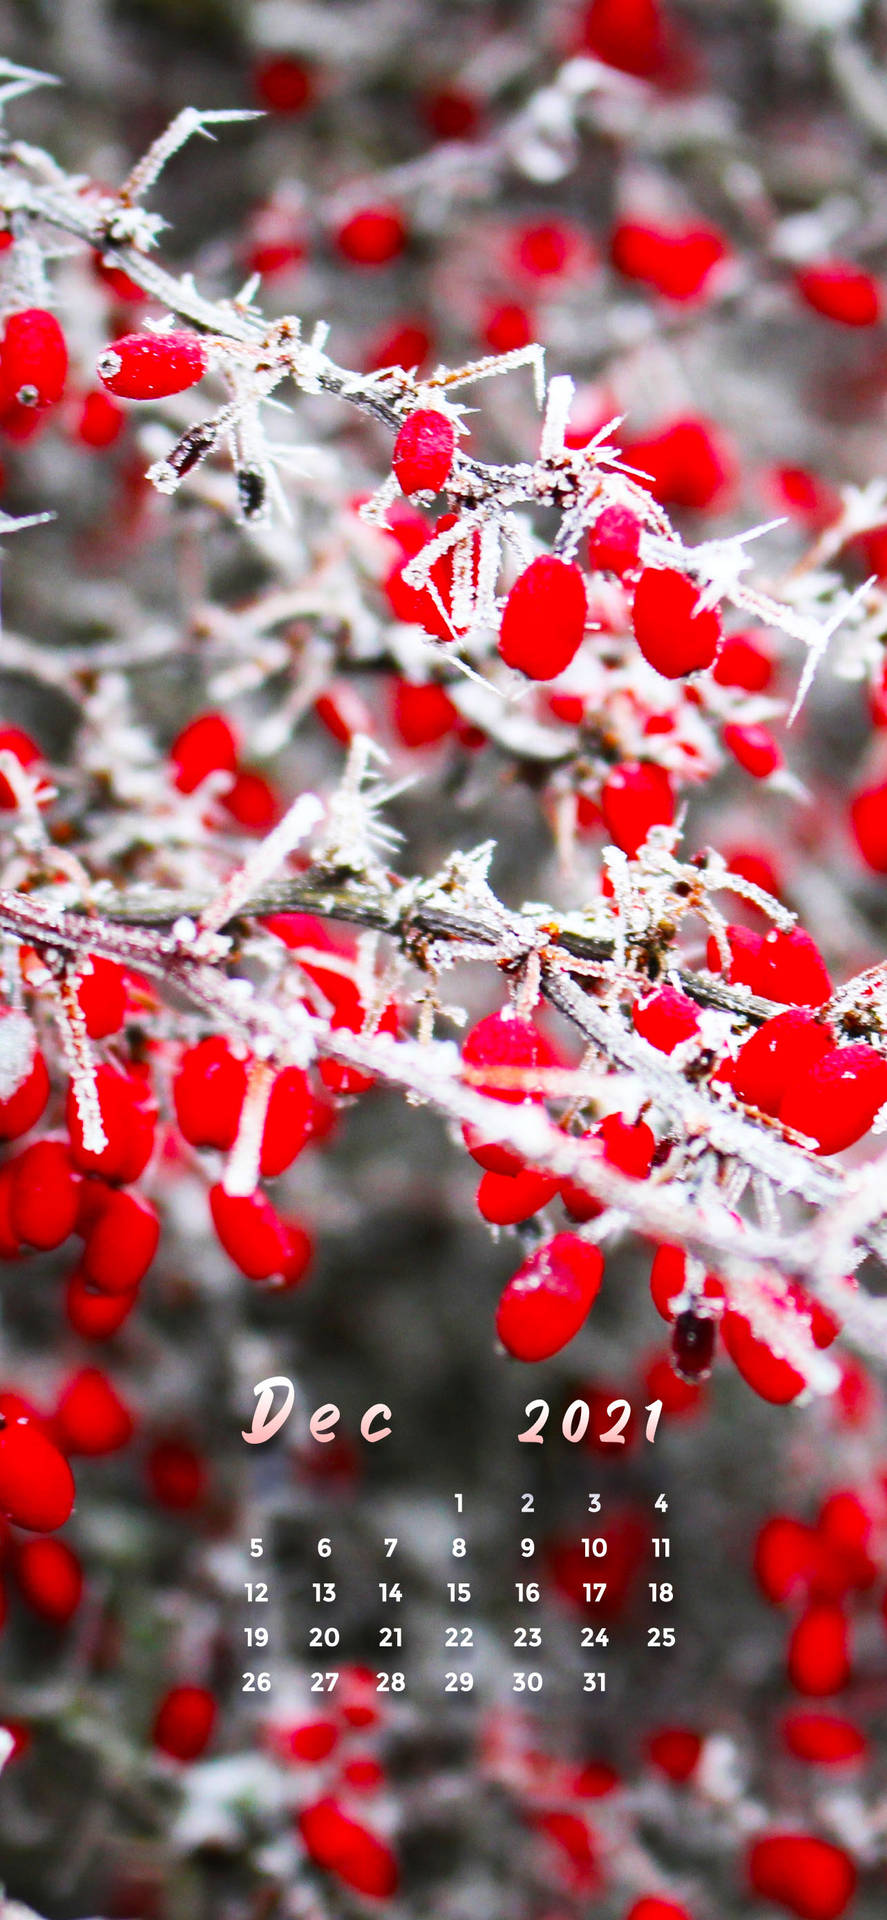 Red Cherries December 2021 Calendar